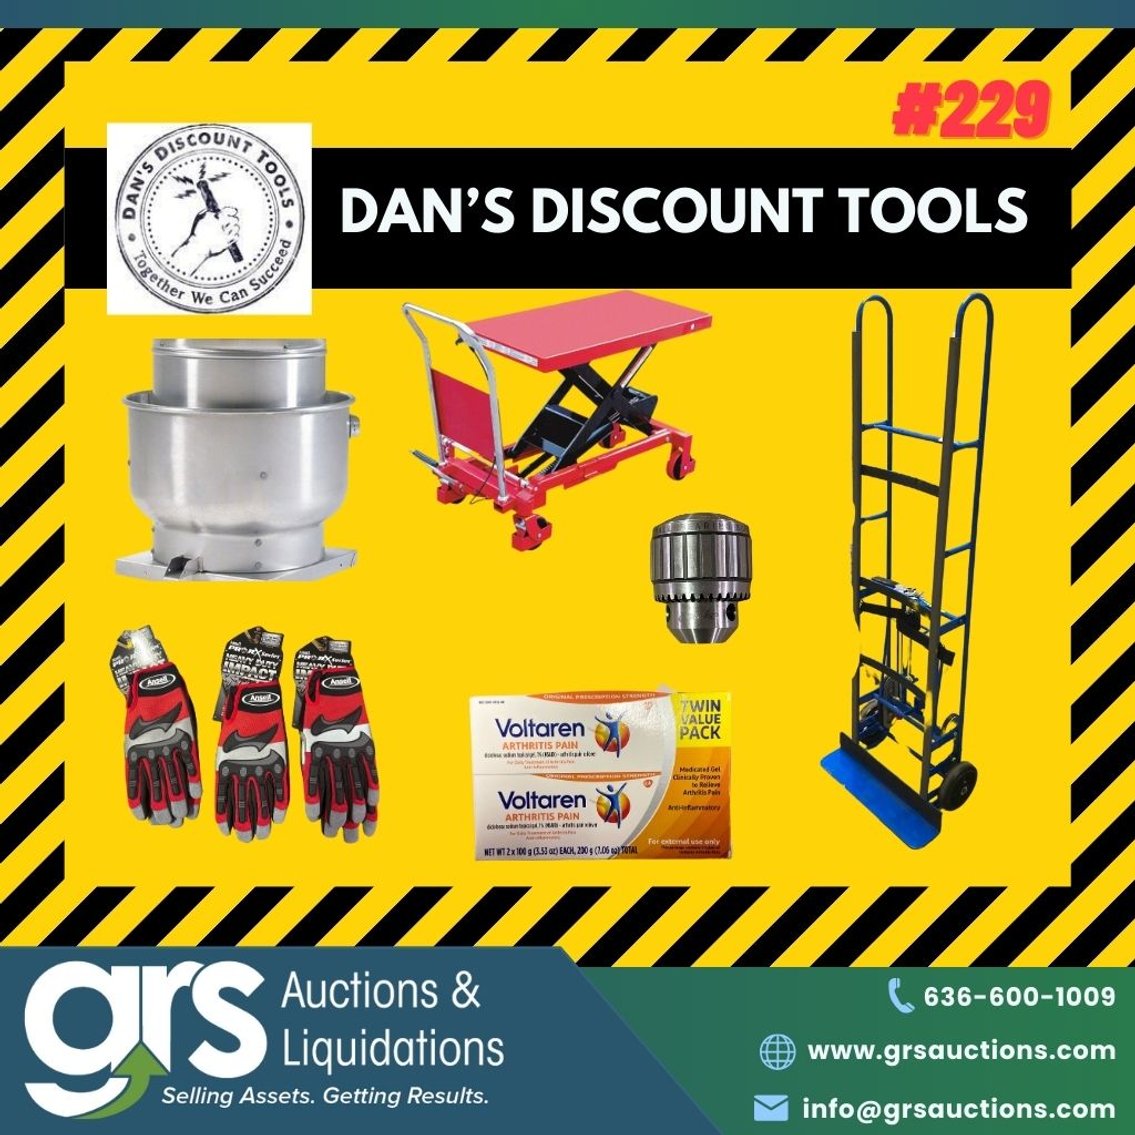 Dan's Discount Tools #229